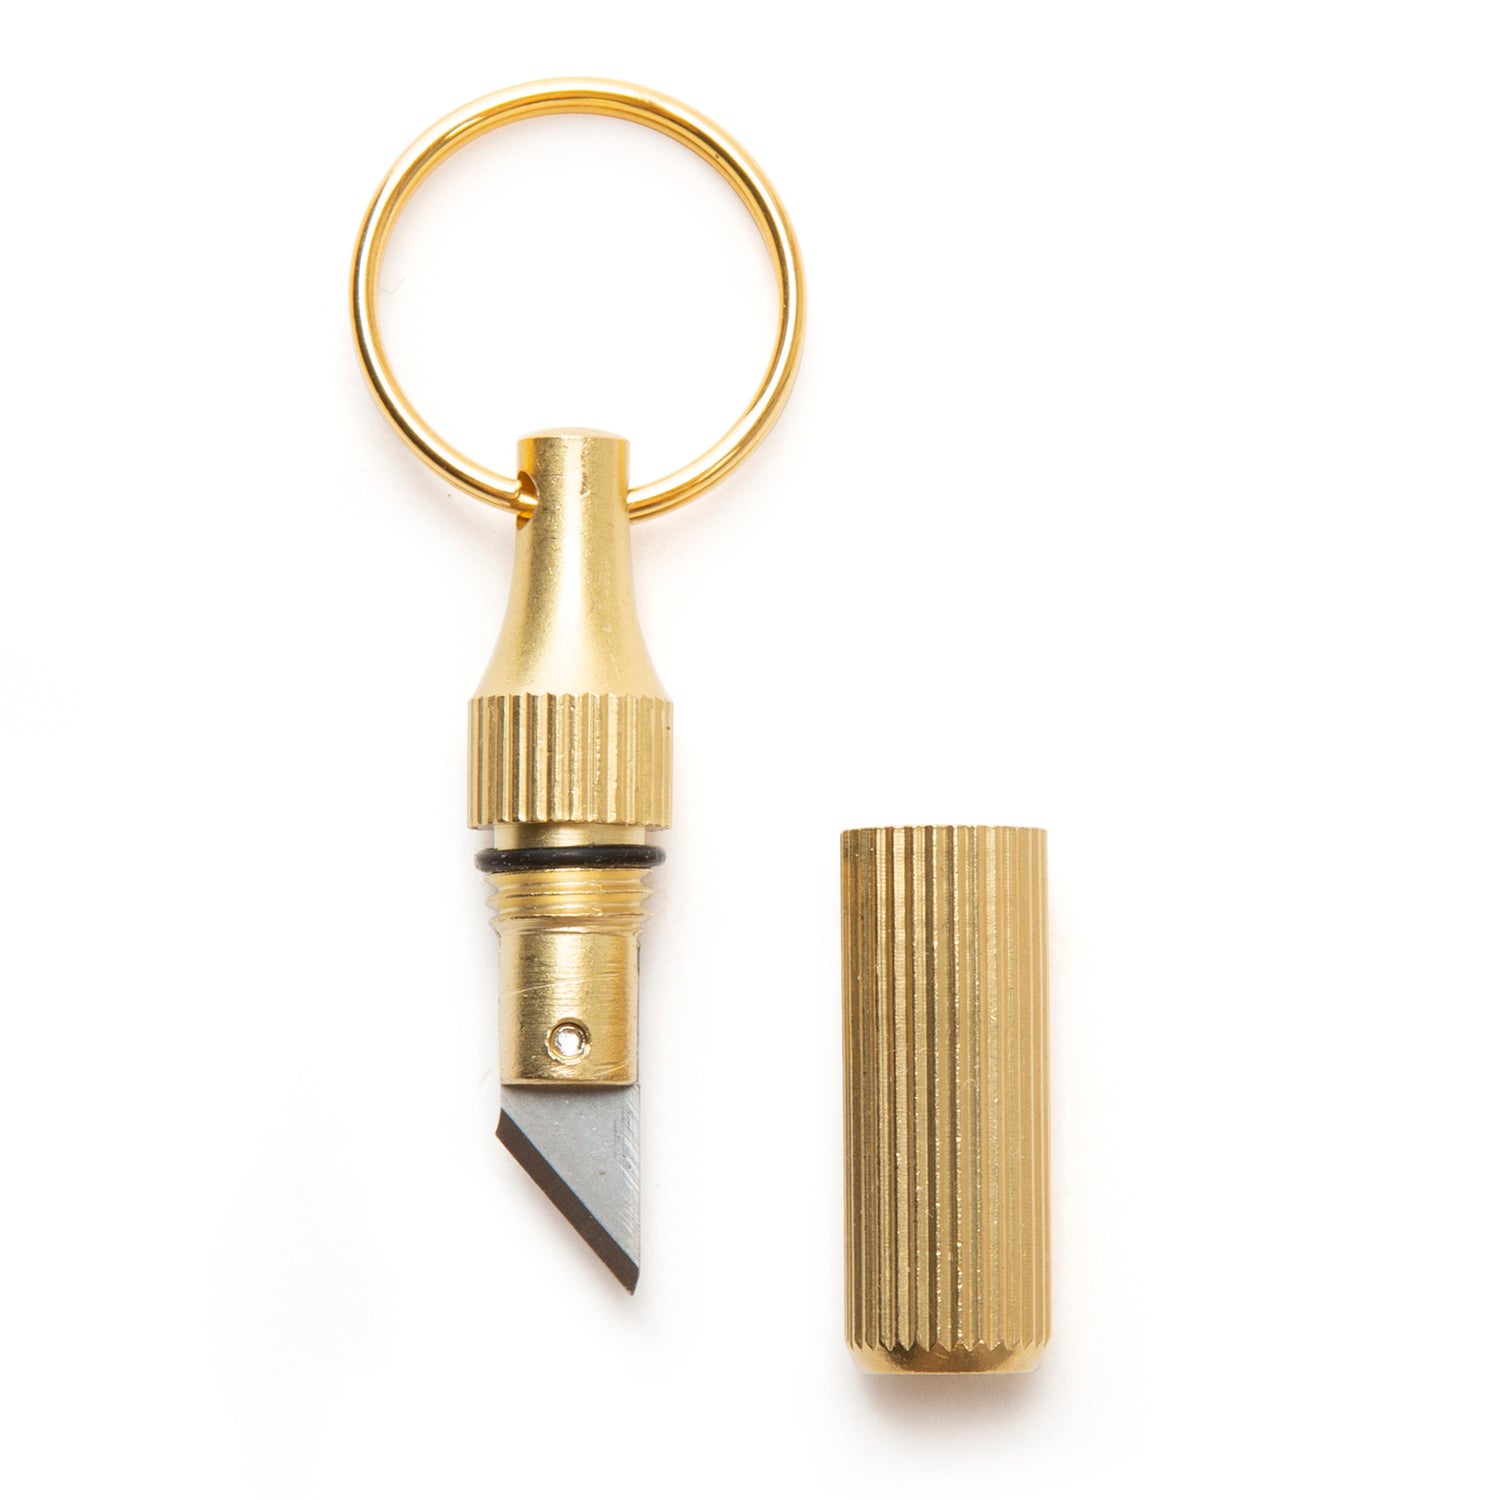 R & M International Mini Kitchen Tool Set with Keychain